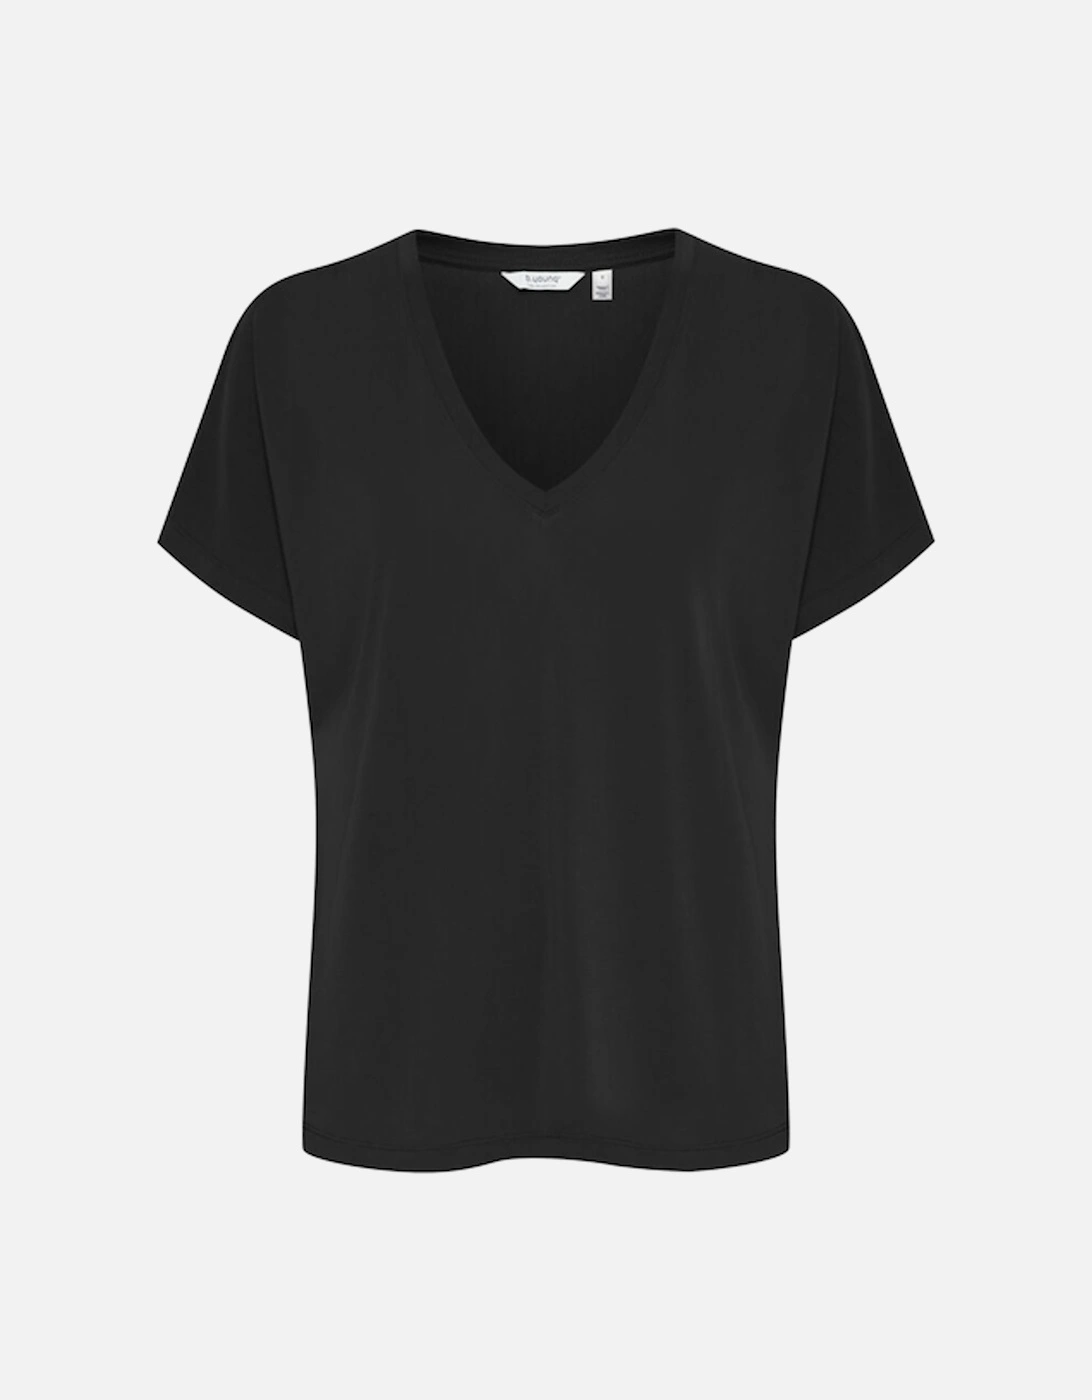 B Young Women's Byperl V Neck Bat T Shirt Black